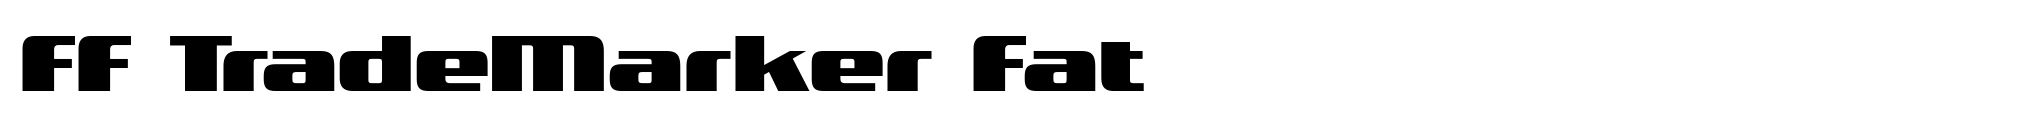 FF TradeMarker Fat image